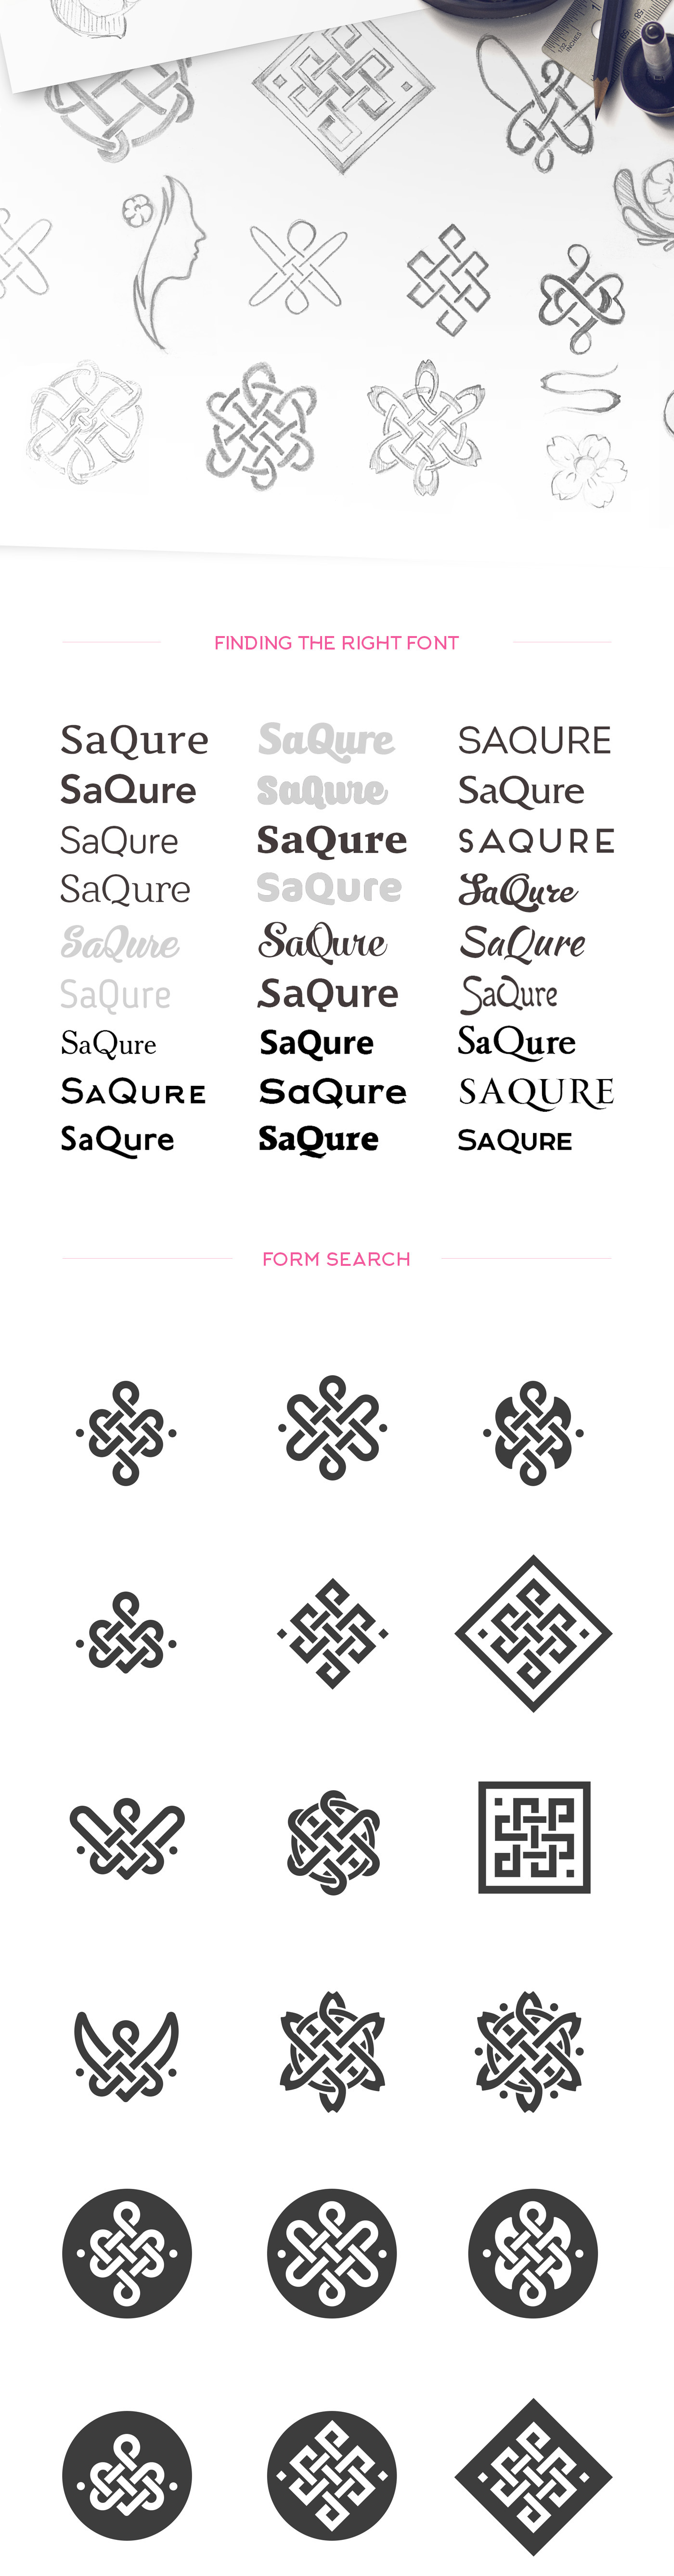 logo Logotype proart SaQure prokopenko   branding  Branding Identity identity process inspire